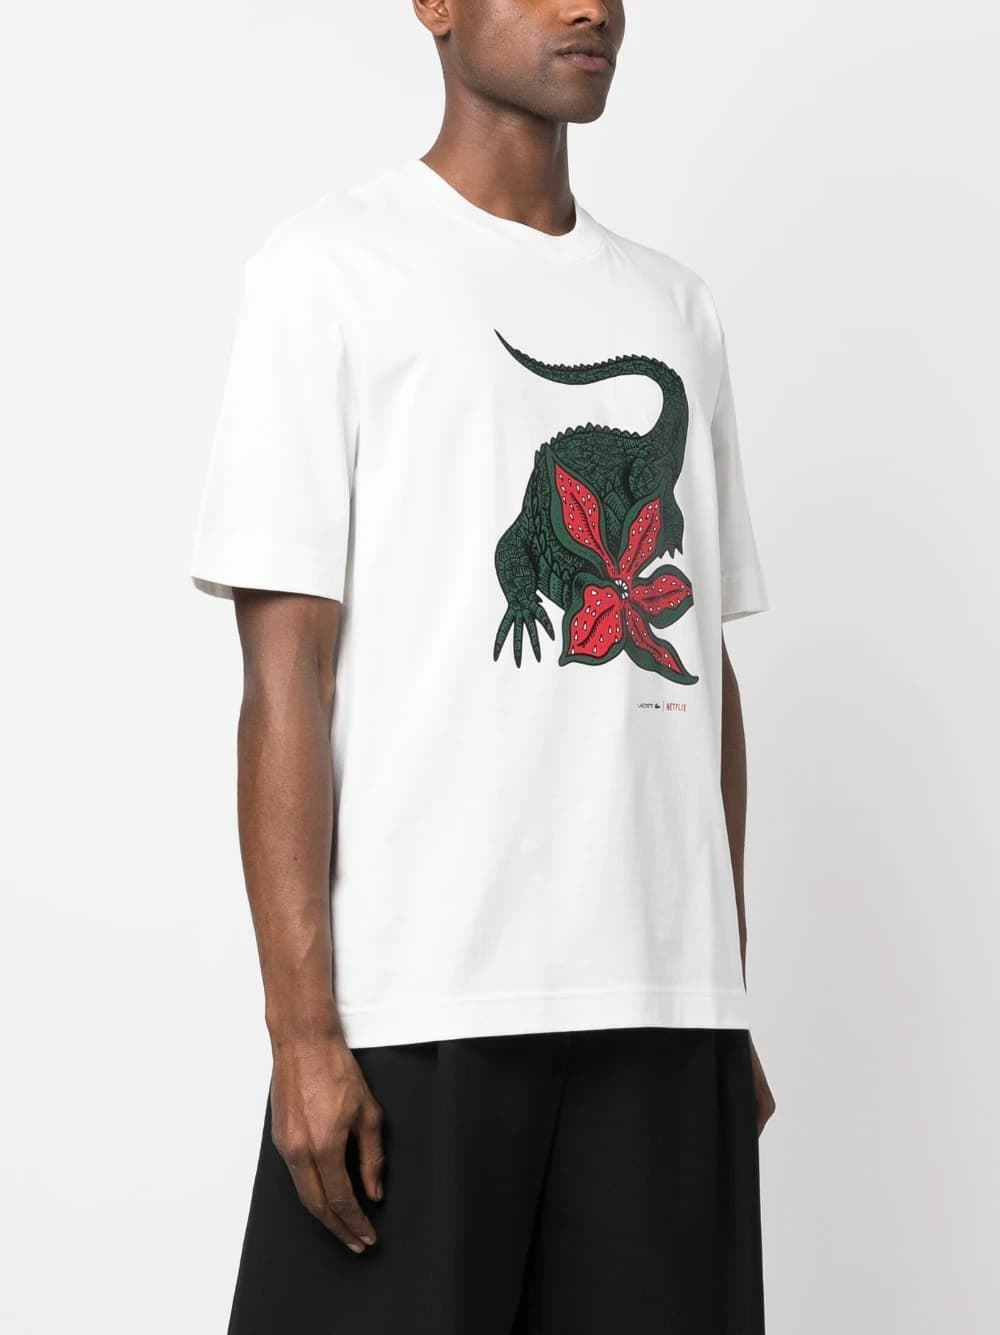 Camiseta Lacoste x Netflix TH8462 00 TIT blanc Stranger Things - Imagen 3